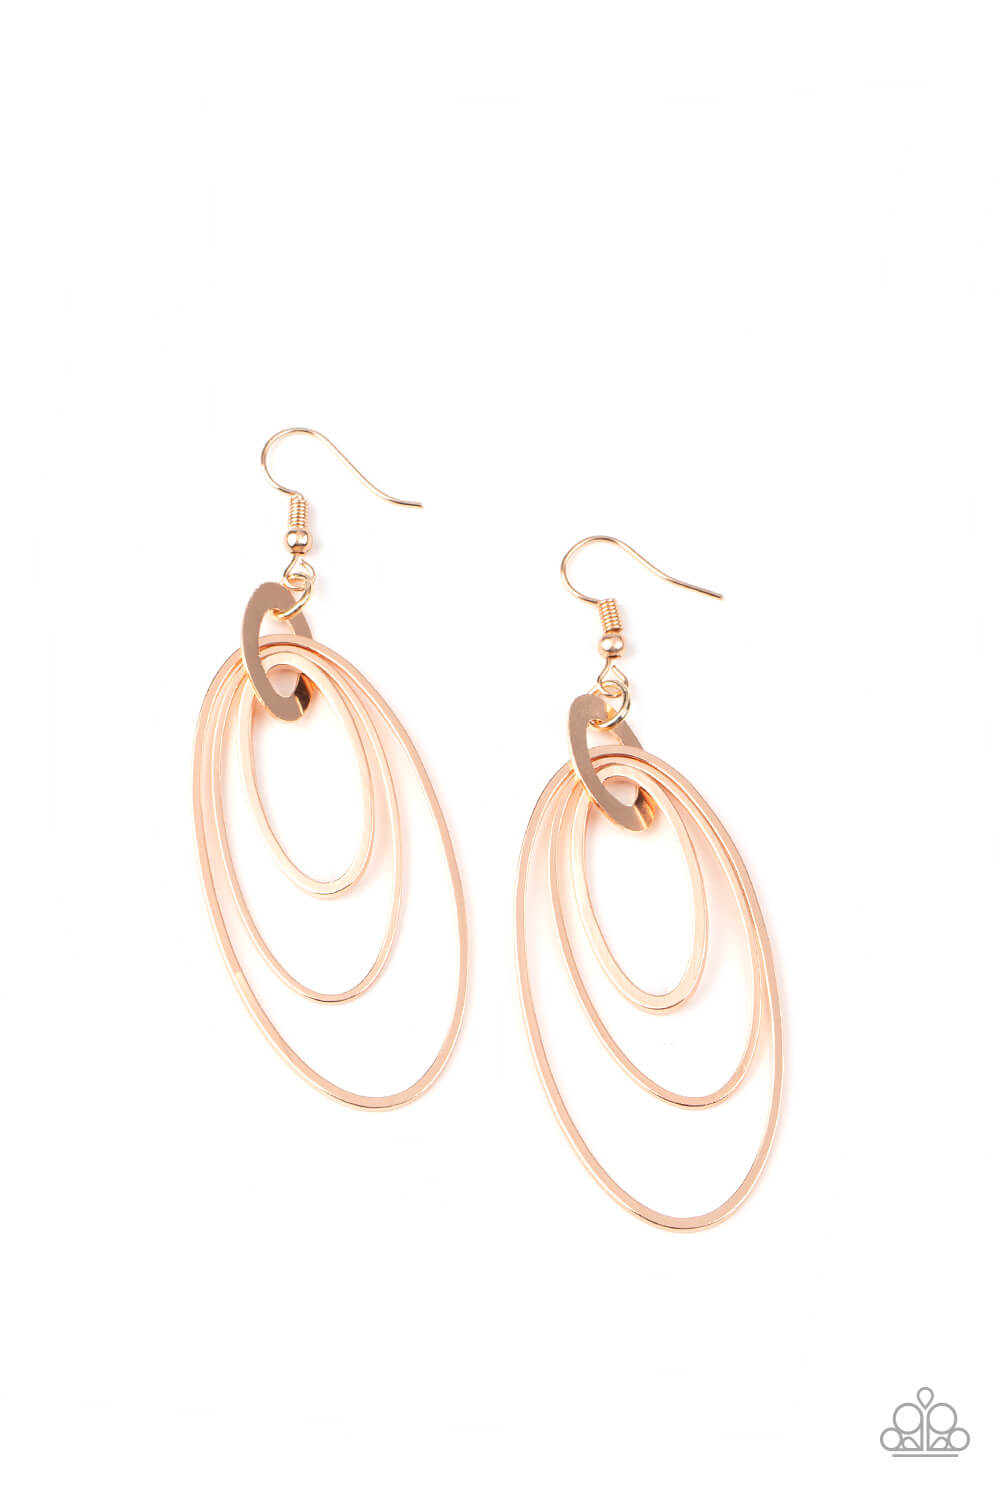 Shimmer Surge - Rose Gold Earrings - Princess Glam Shop